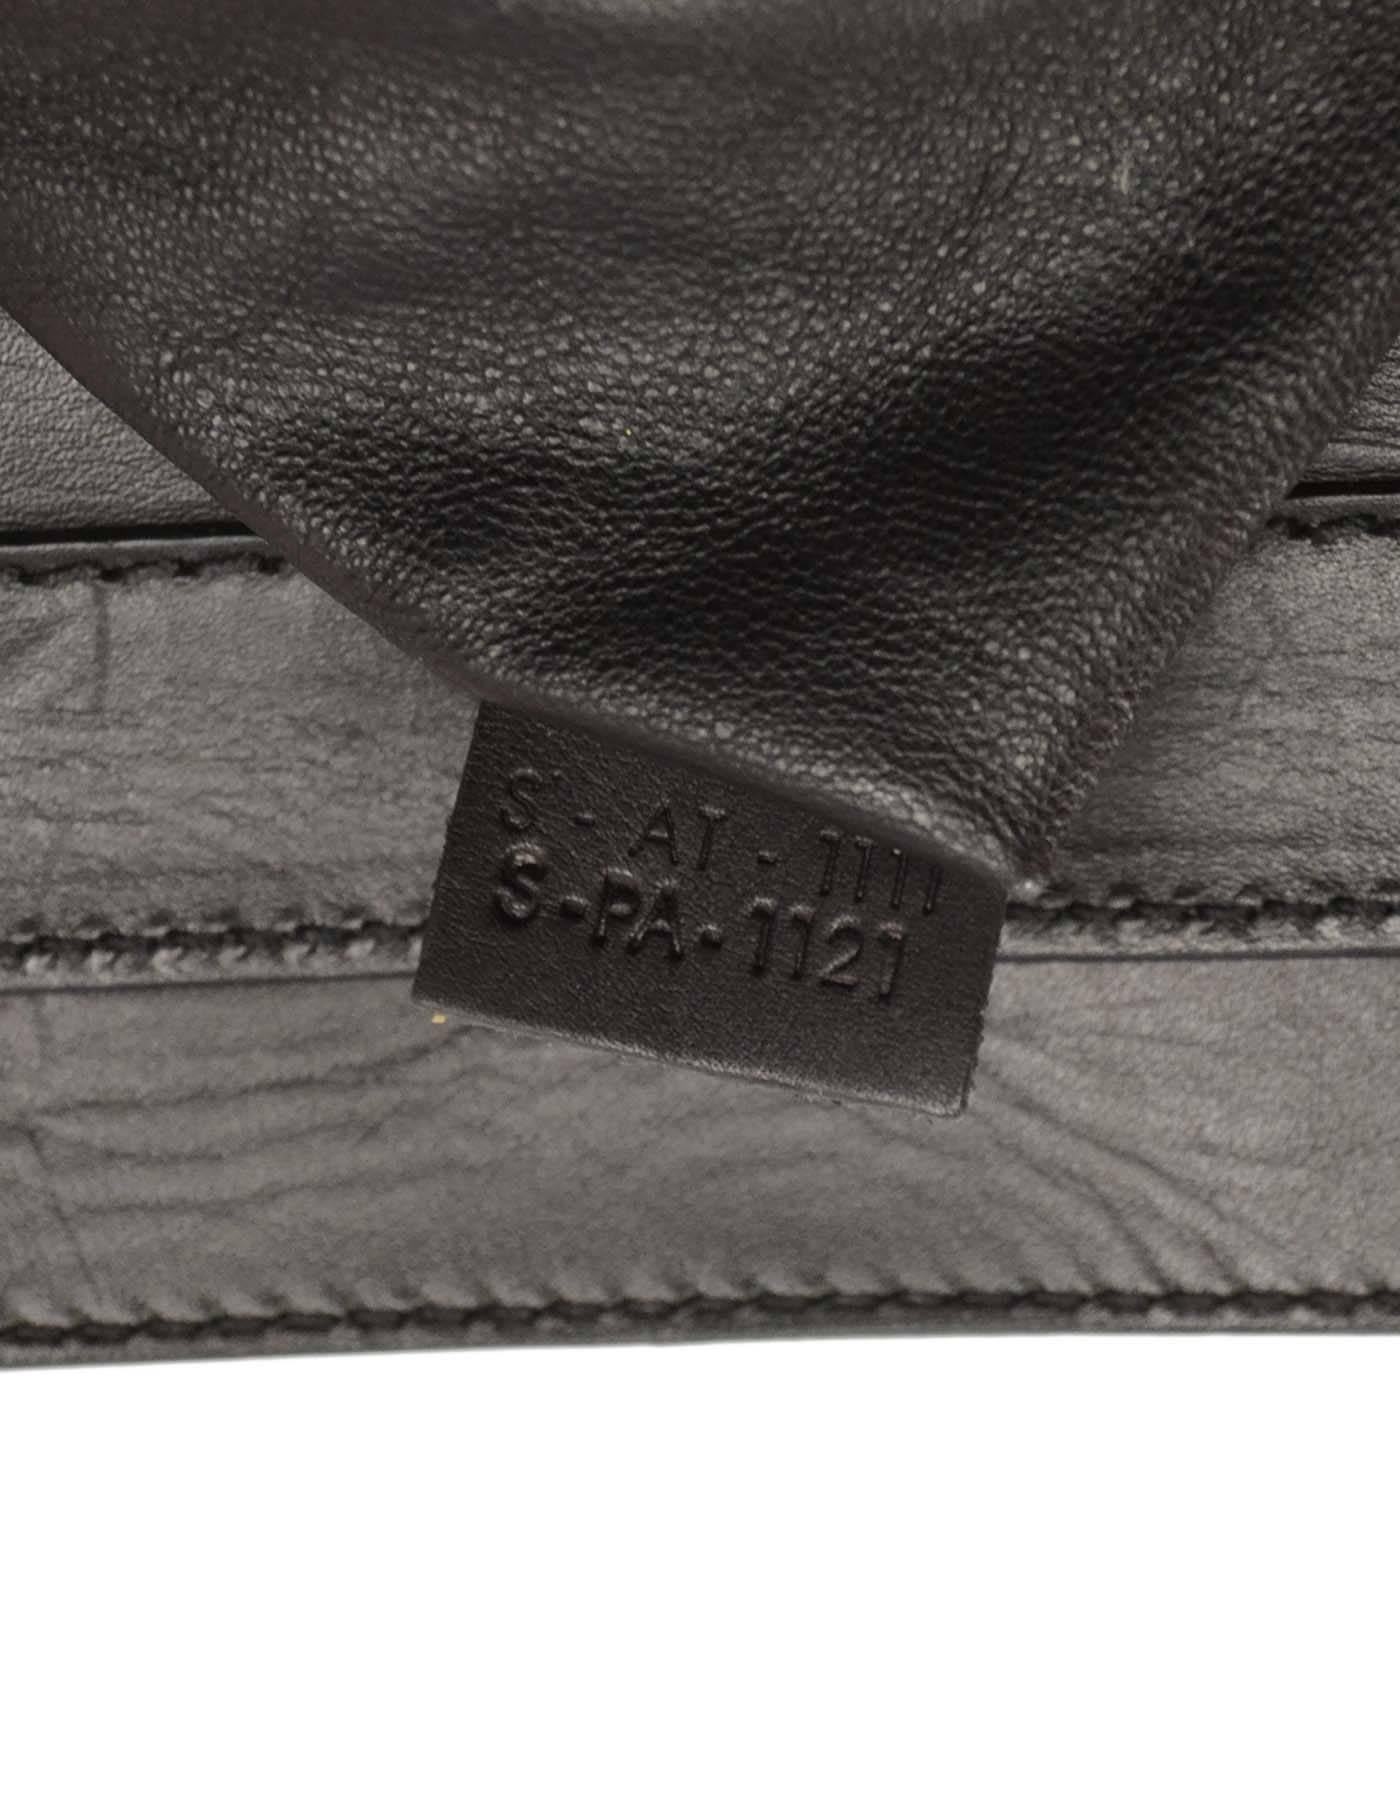 Celine Ivory & Black Canvas/Leather Mini Luggage Tote Bag GHW 2